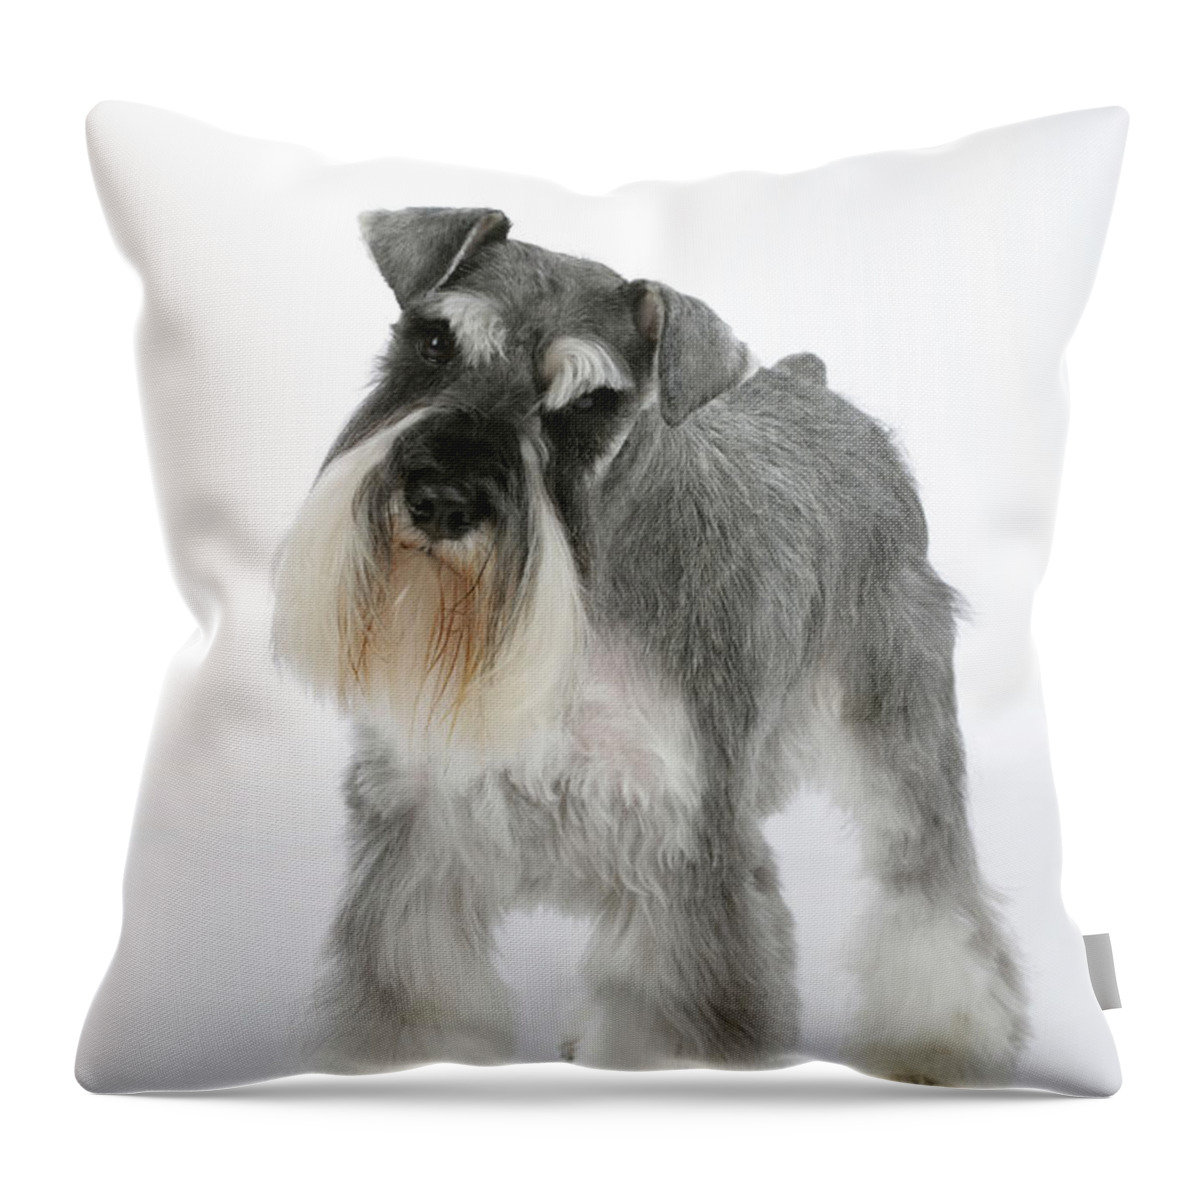 Dog Throw Pillow featuring the photograph Miniature Schnauzer by John Daniels